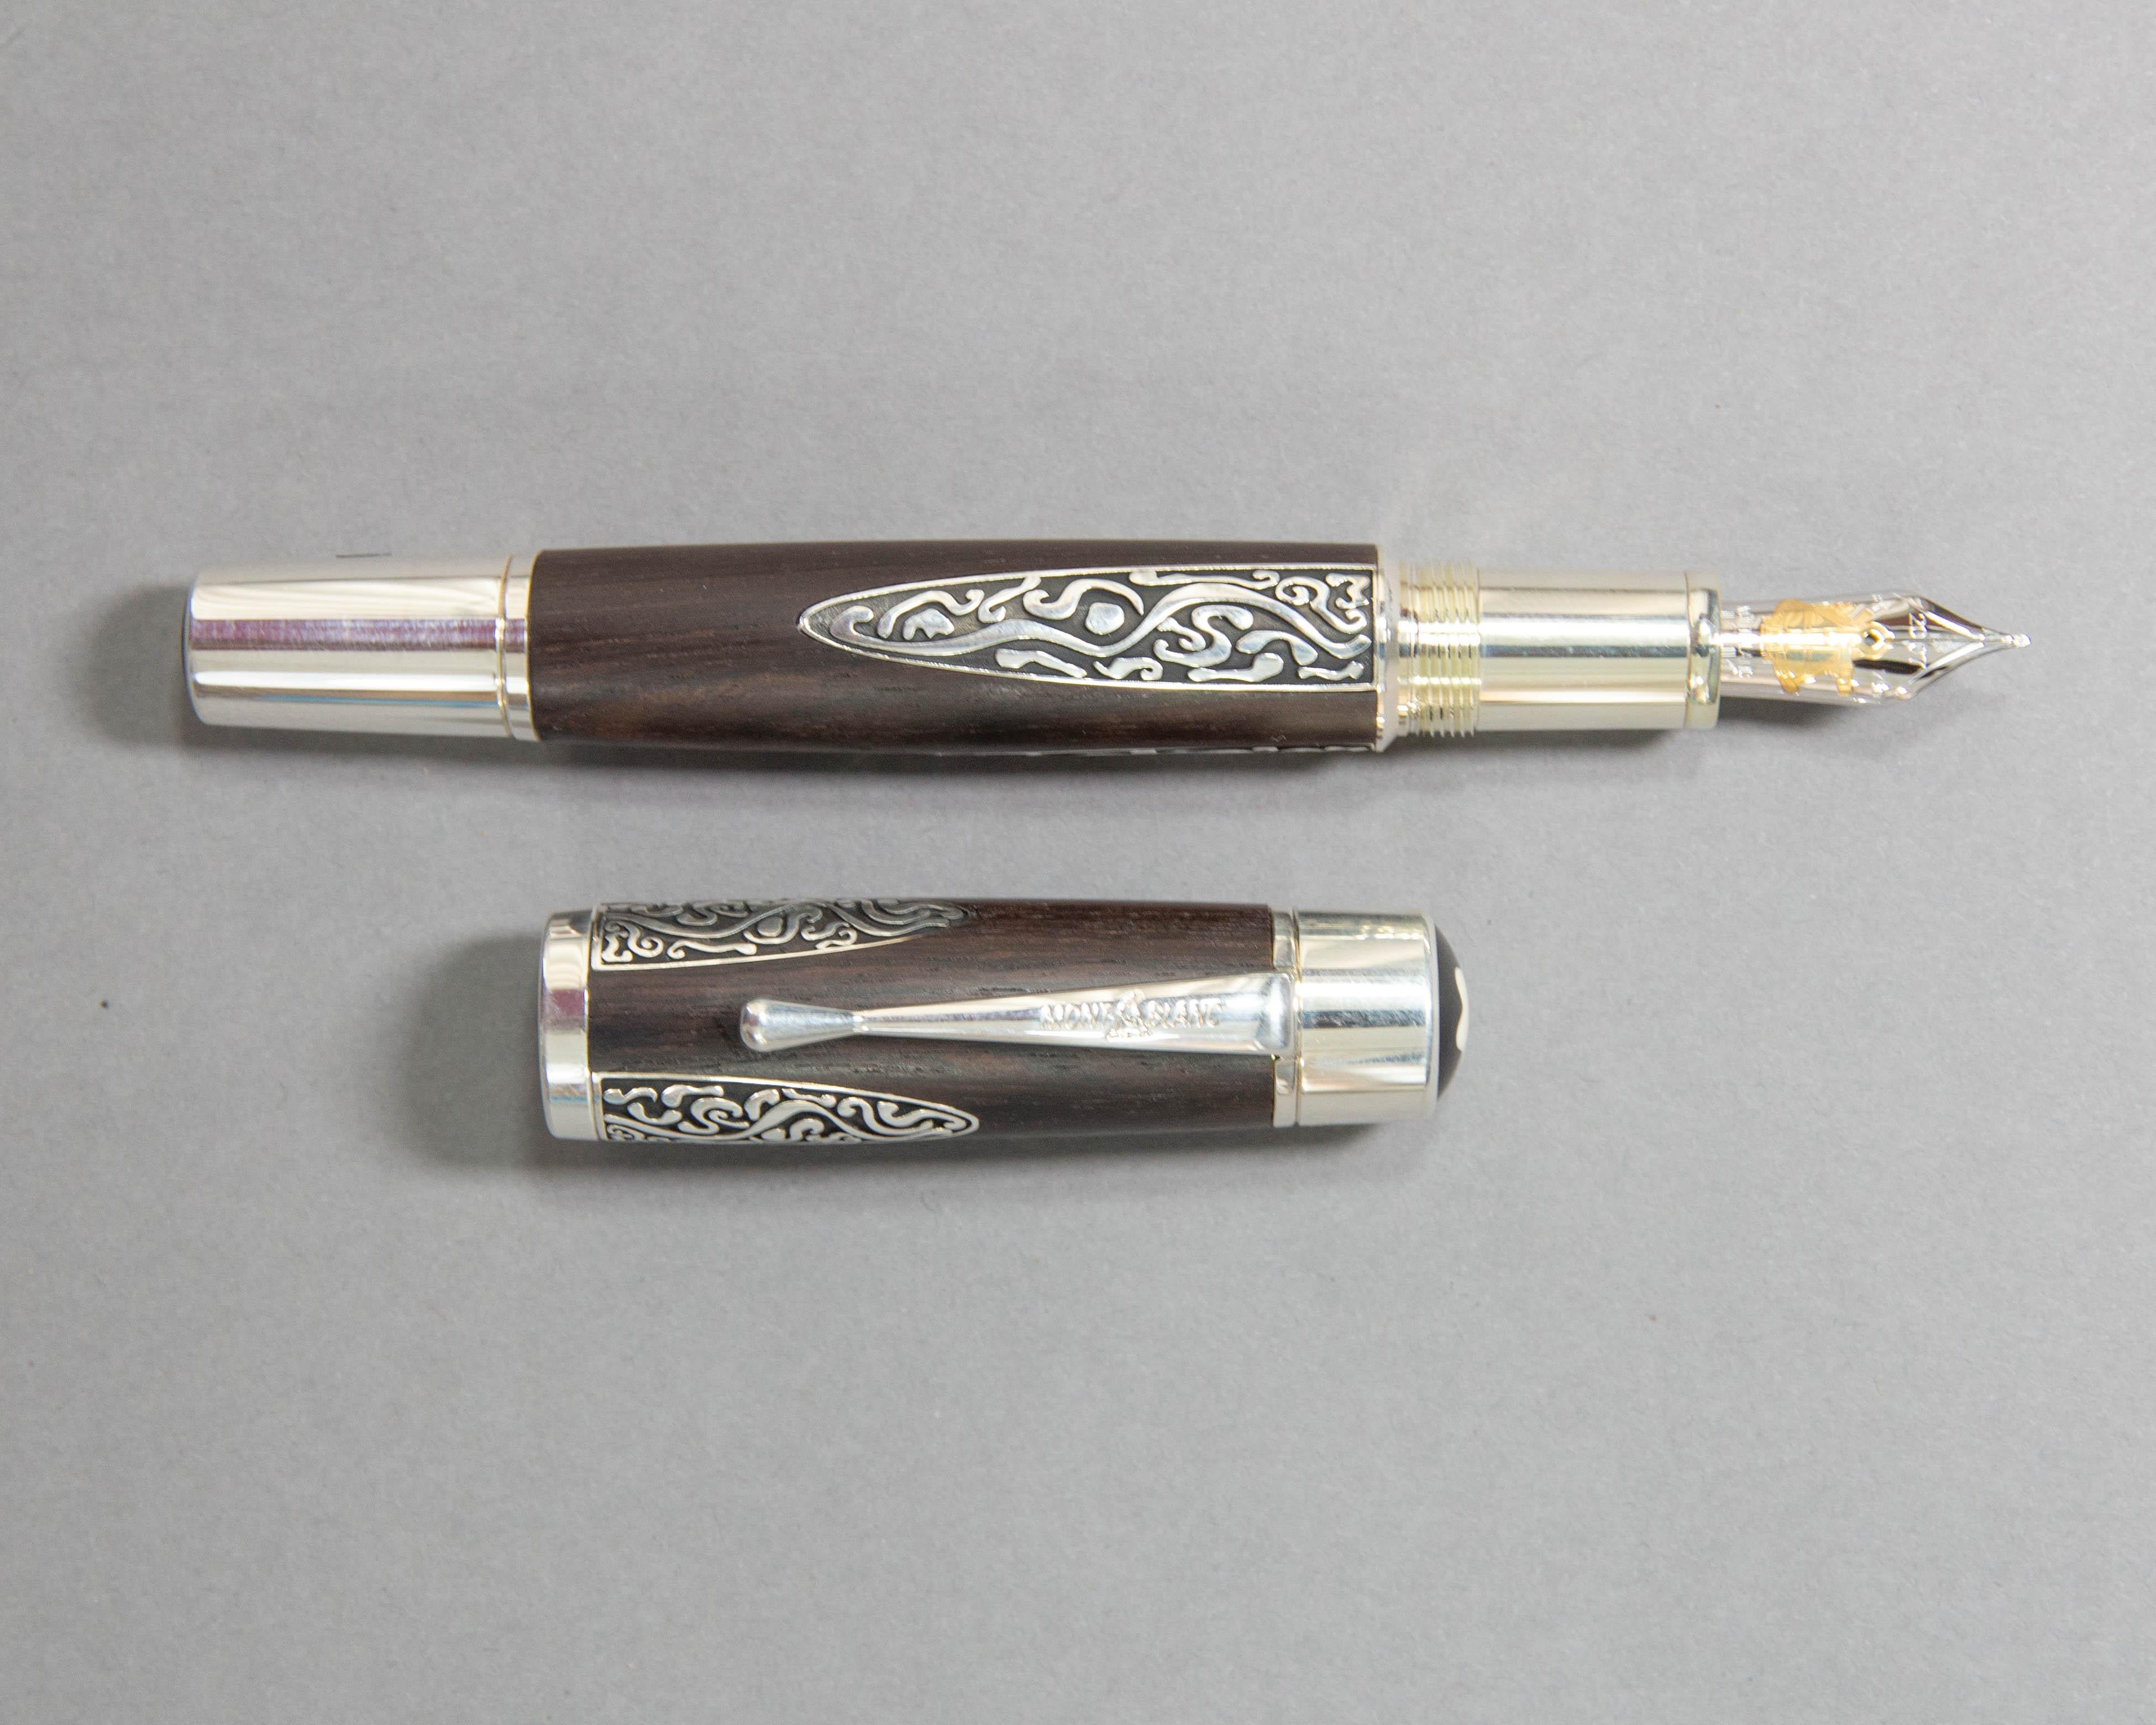 New Montblanc Limited Edition Alexander von Humboldt Fountain Pen 1905/4810 with 1